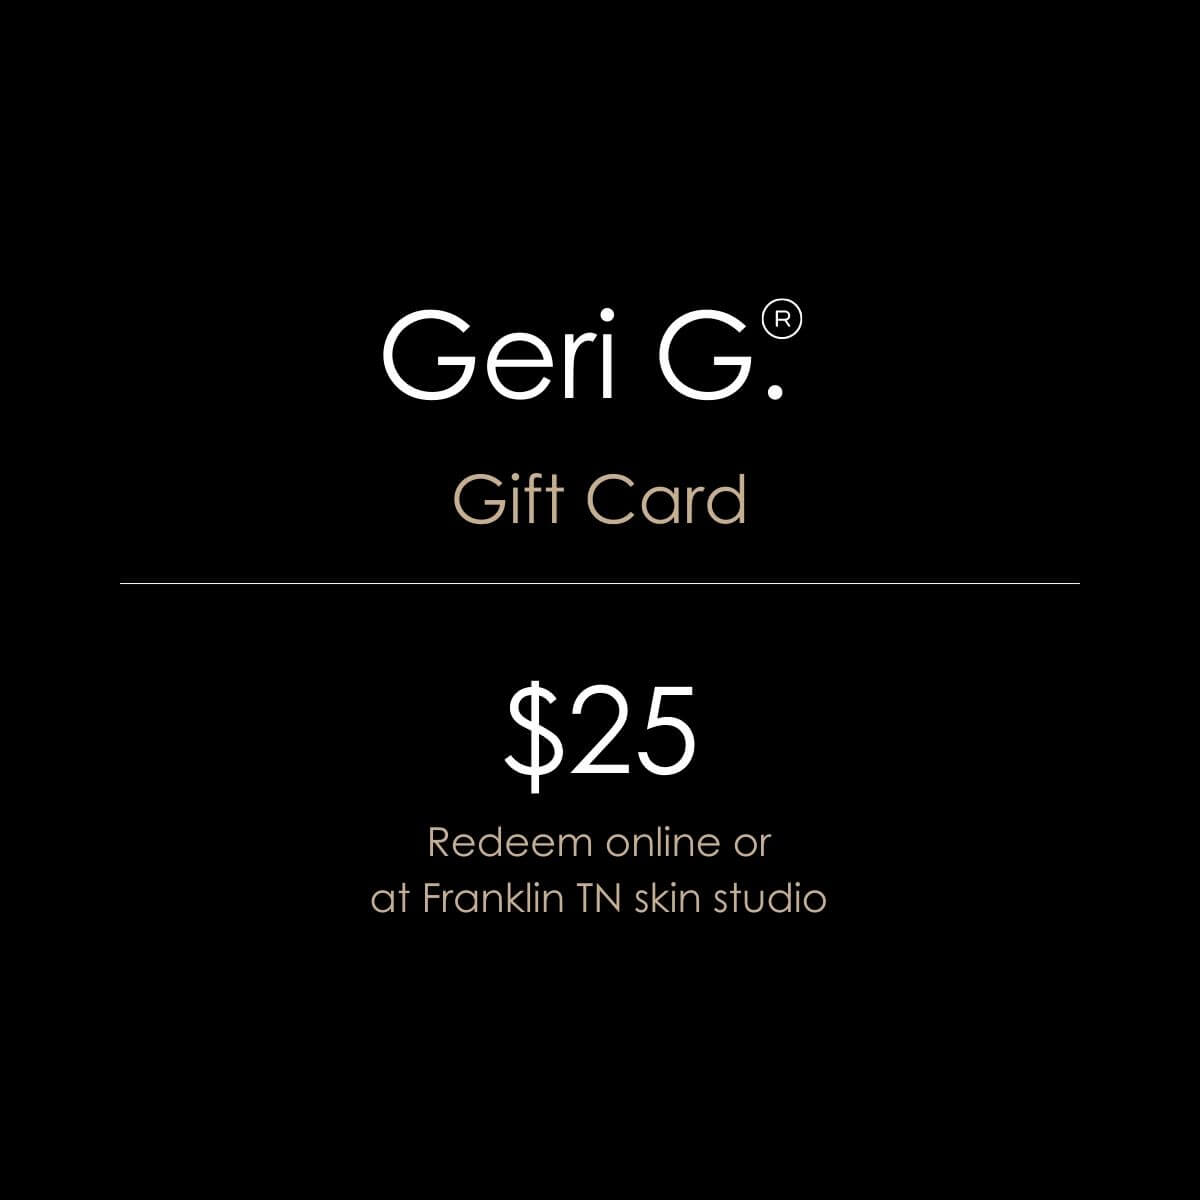 Gift Card, Digital gift cards starting at $25